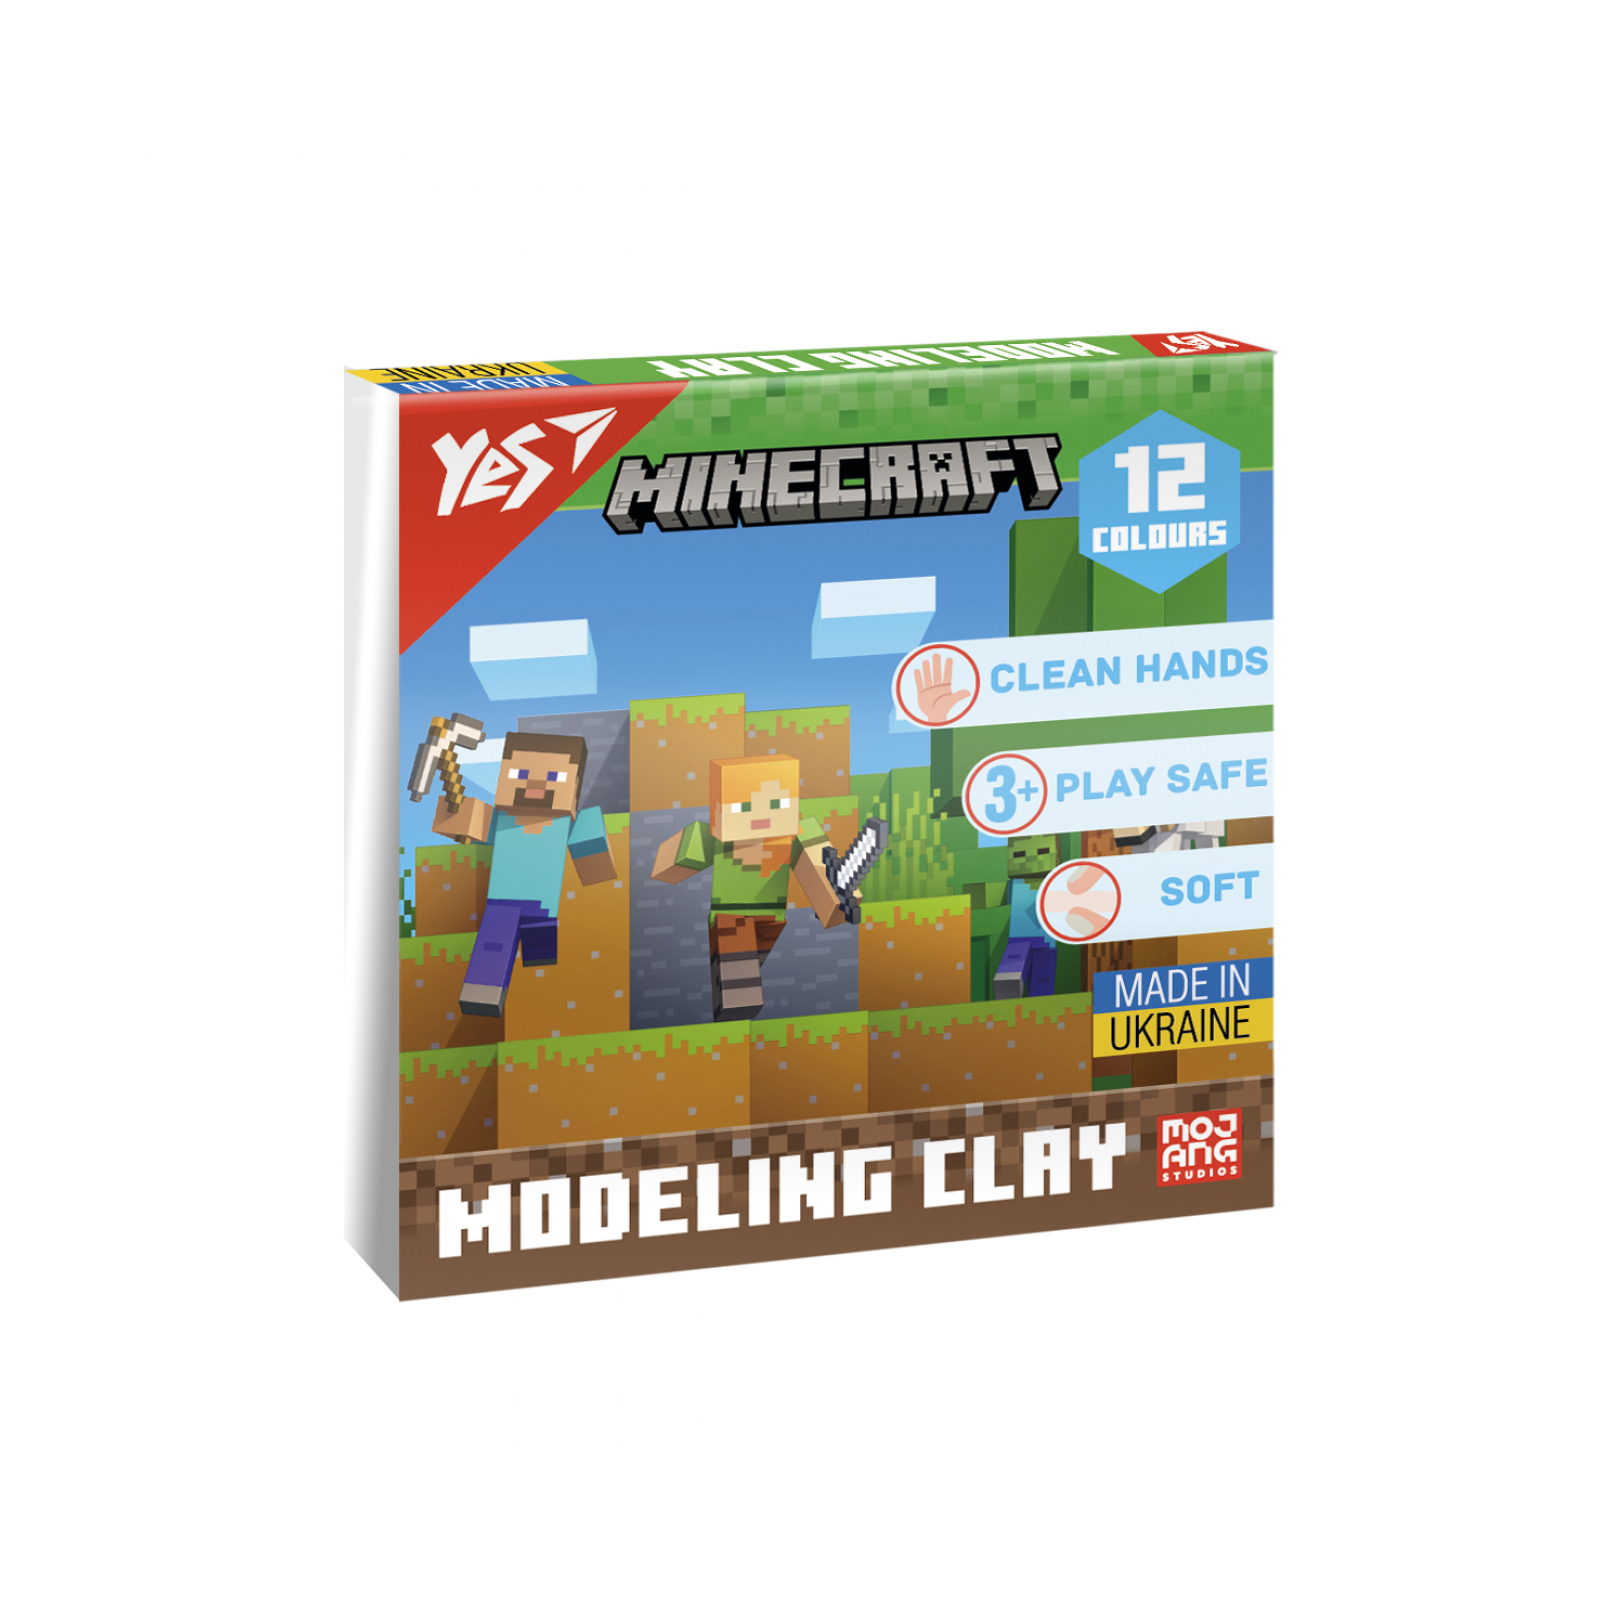 Пластилин Yes Minecraft 12 цветов 240 г (540668)